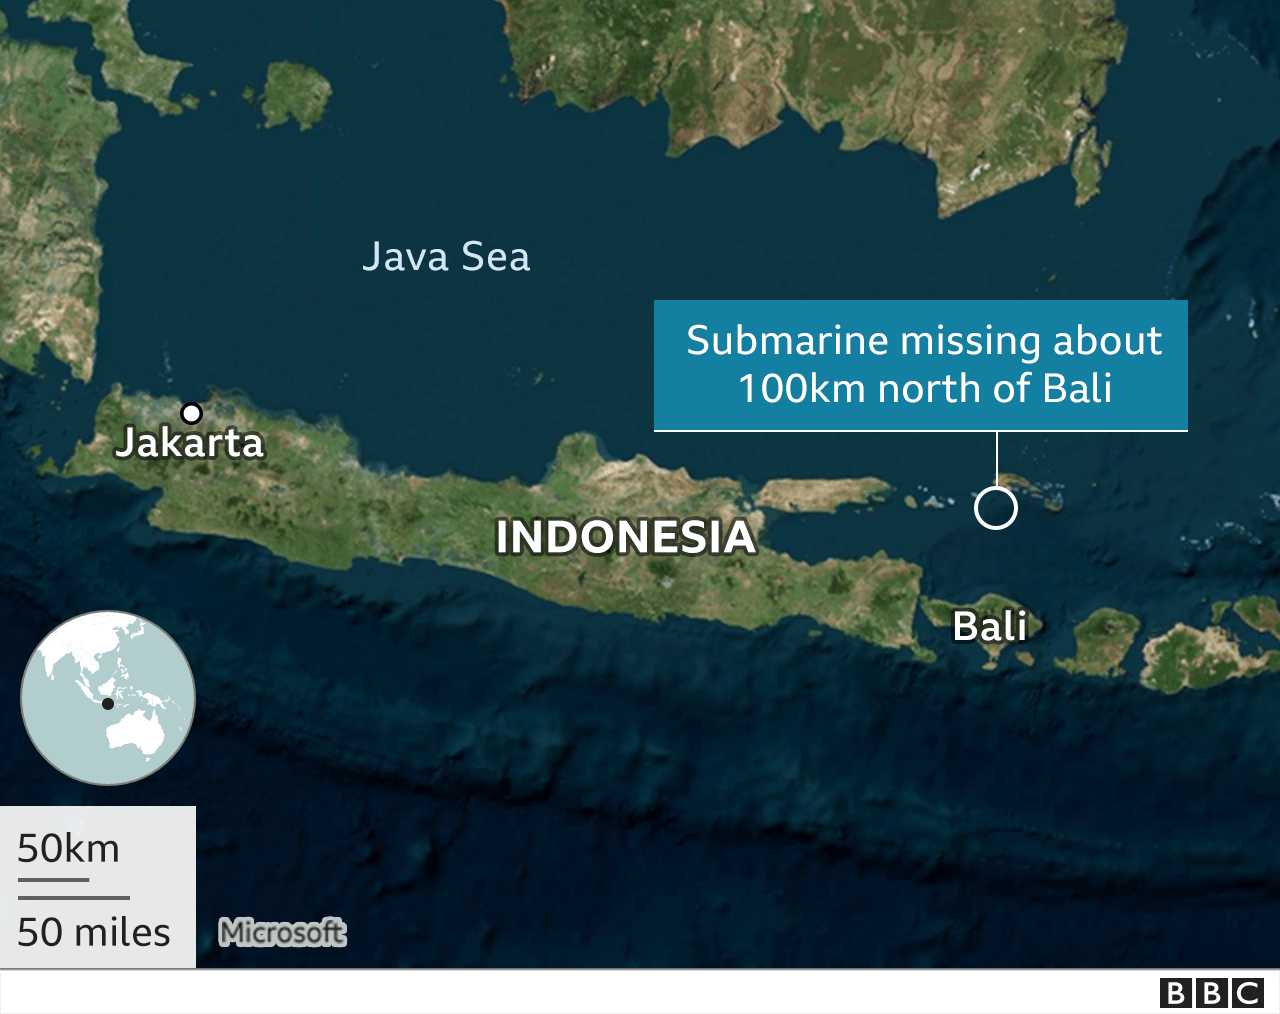 На изображении показана карта Индонезии и место пропажи подводной лодки